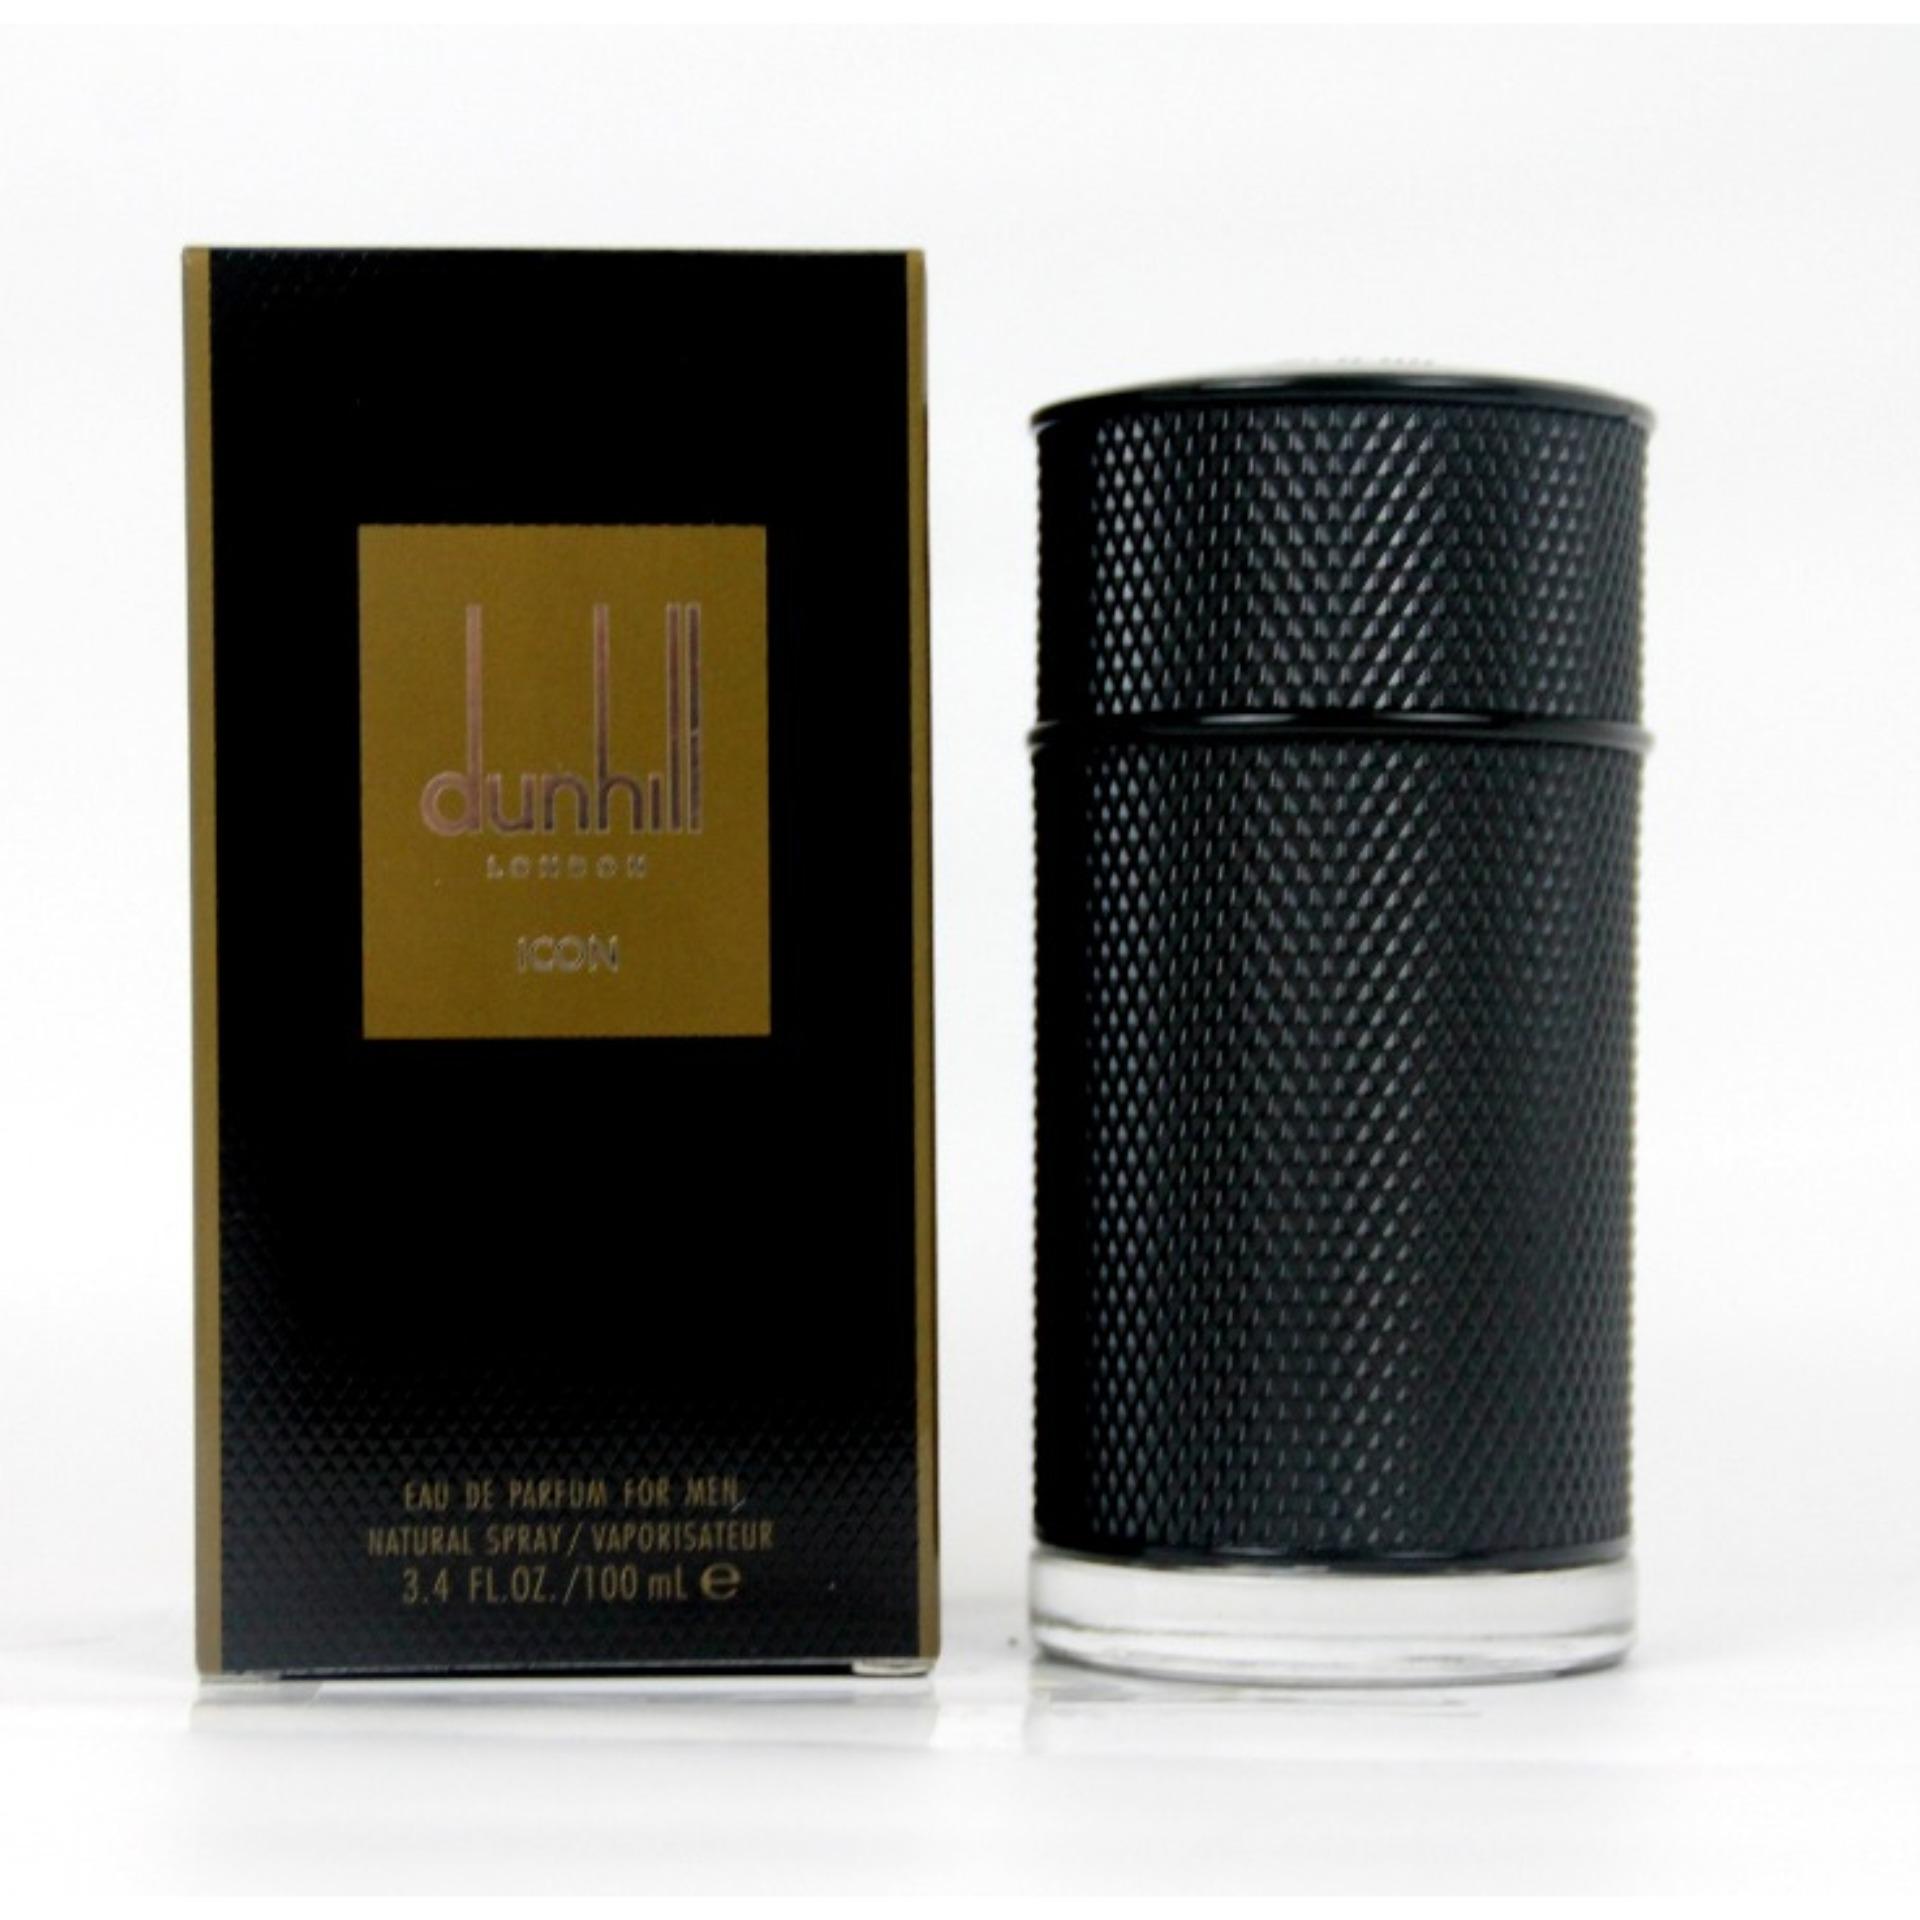 dunhill black perfume